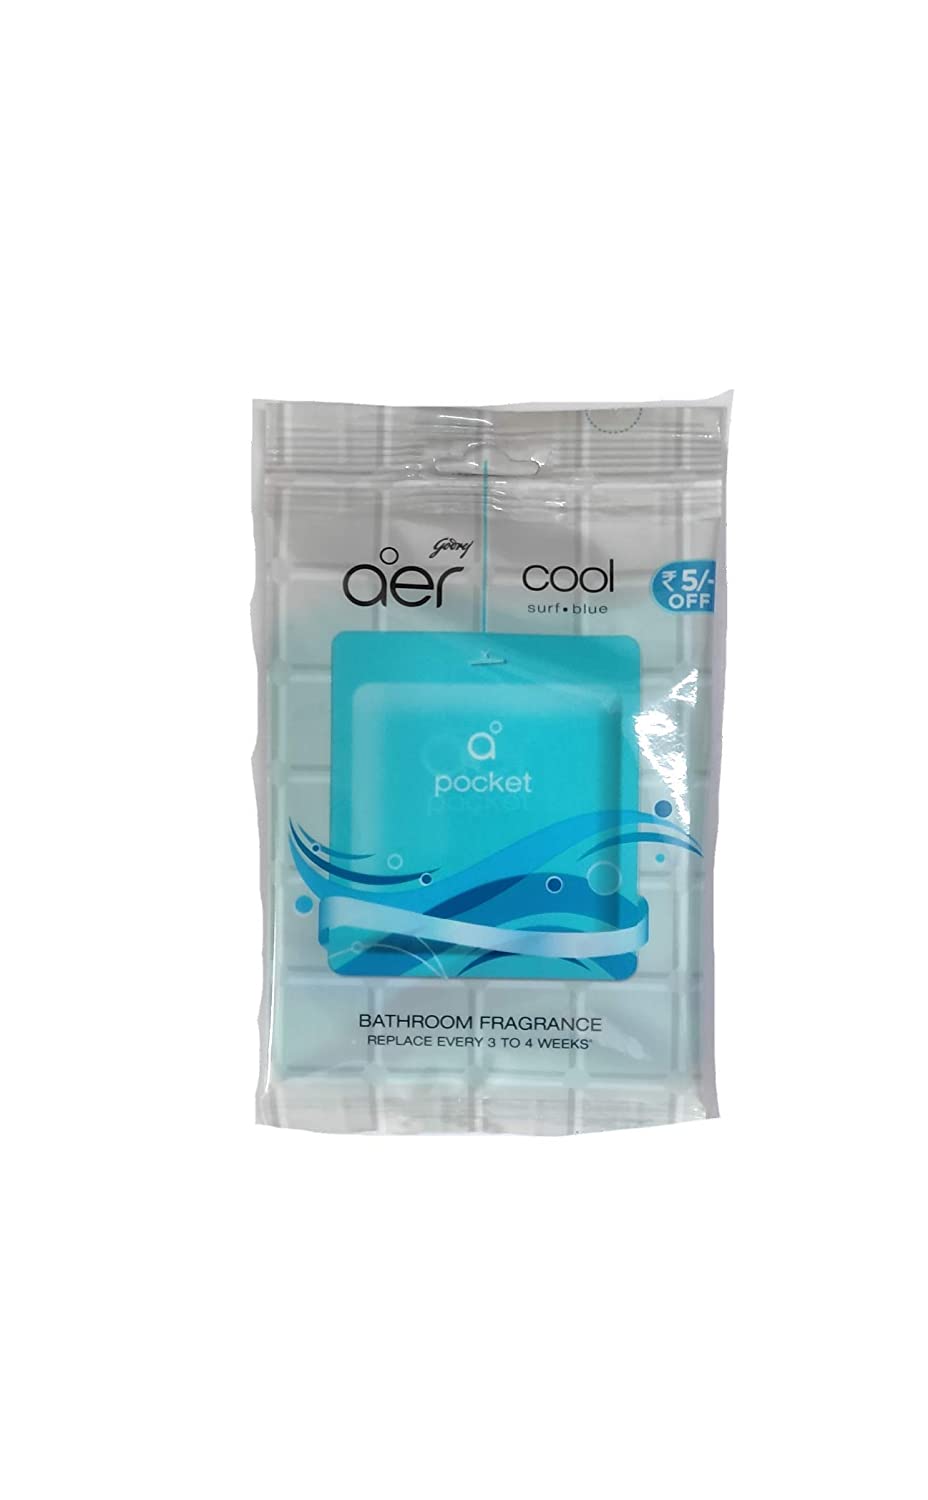 Godrej aer Pocket, Bathroom Air Fragrance - Cool Surf Blue ,10g